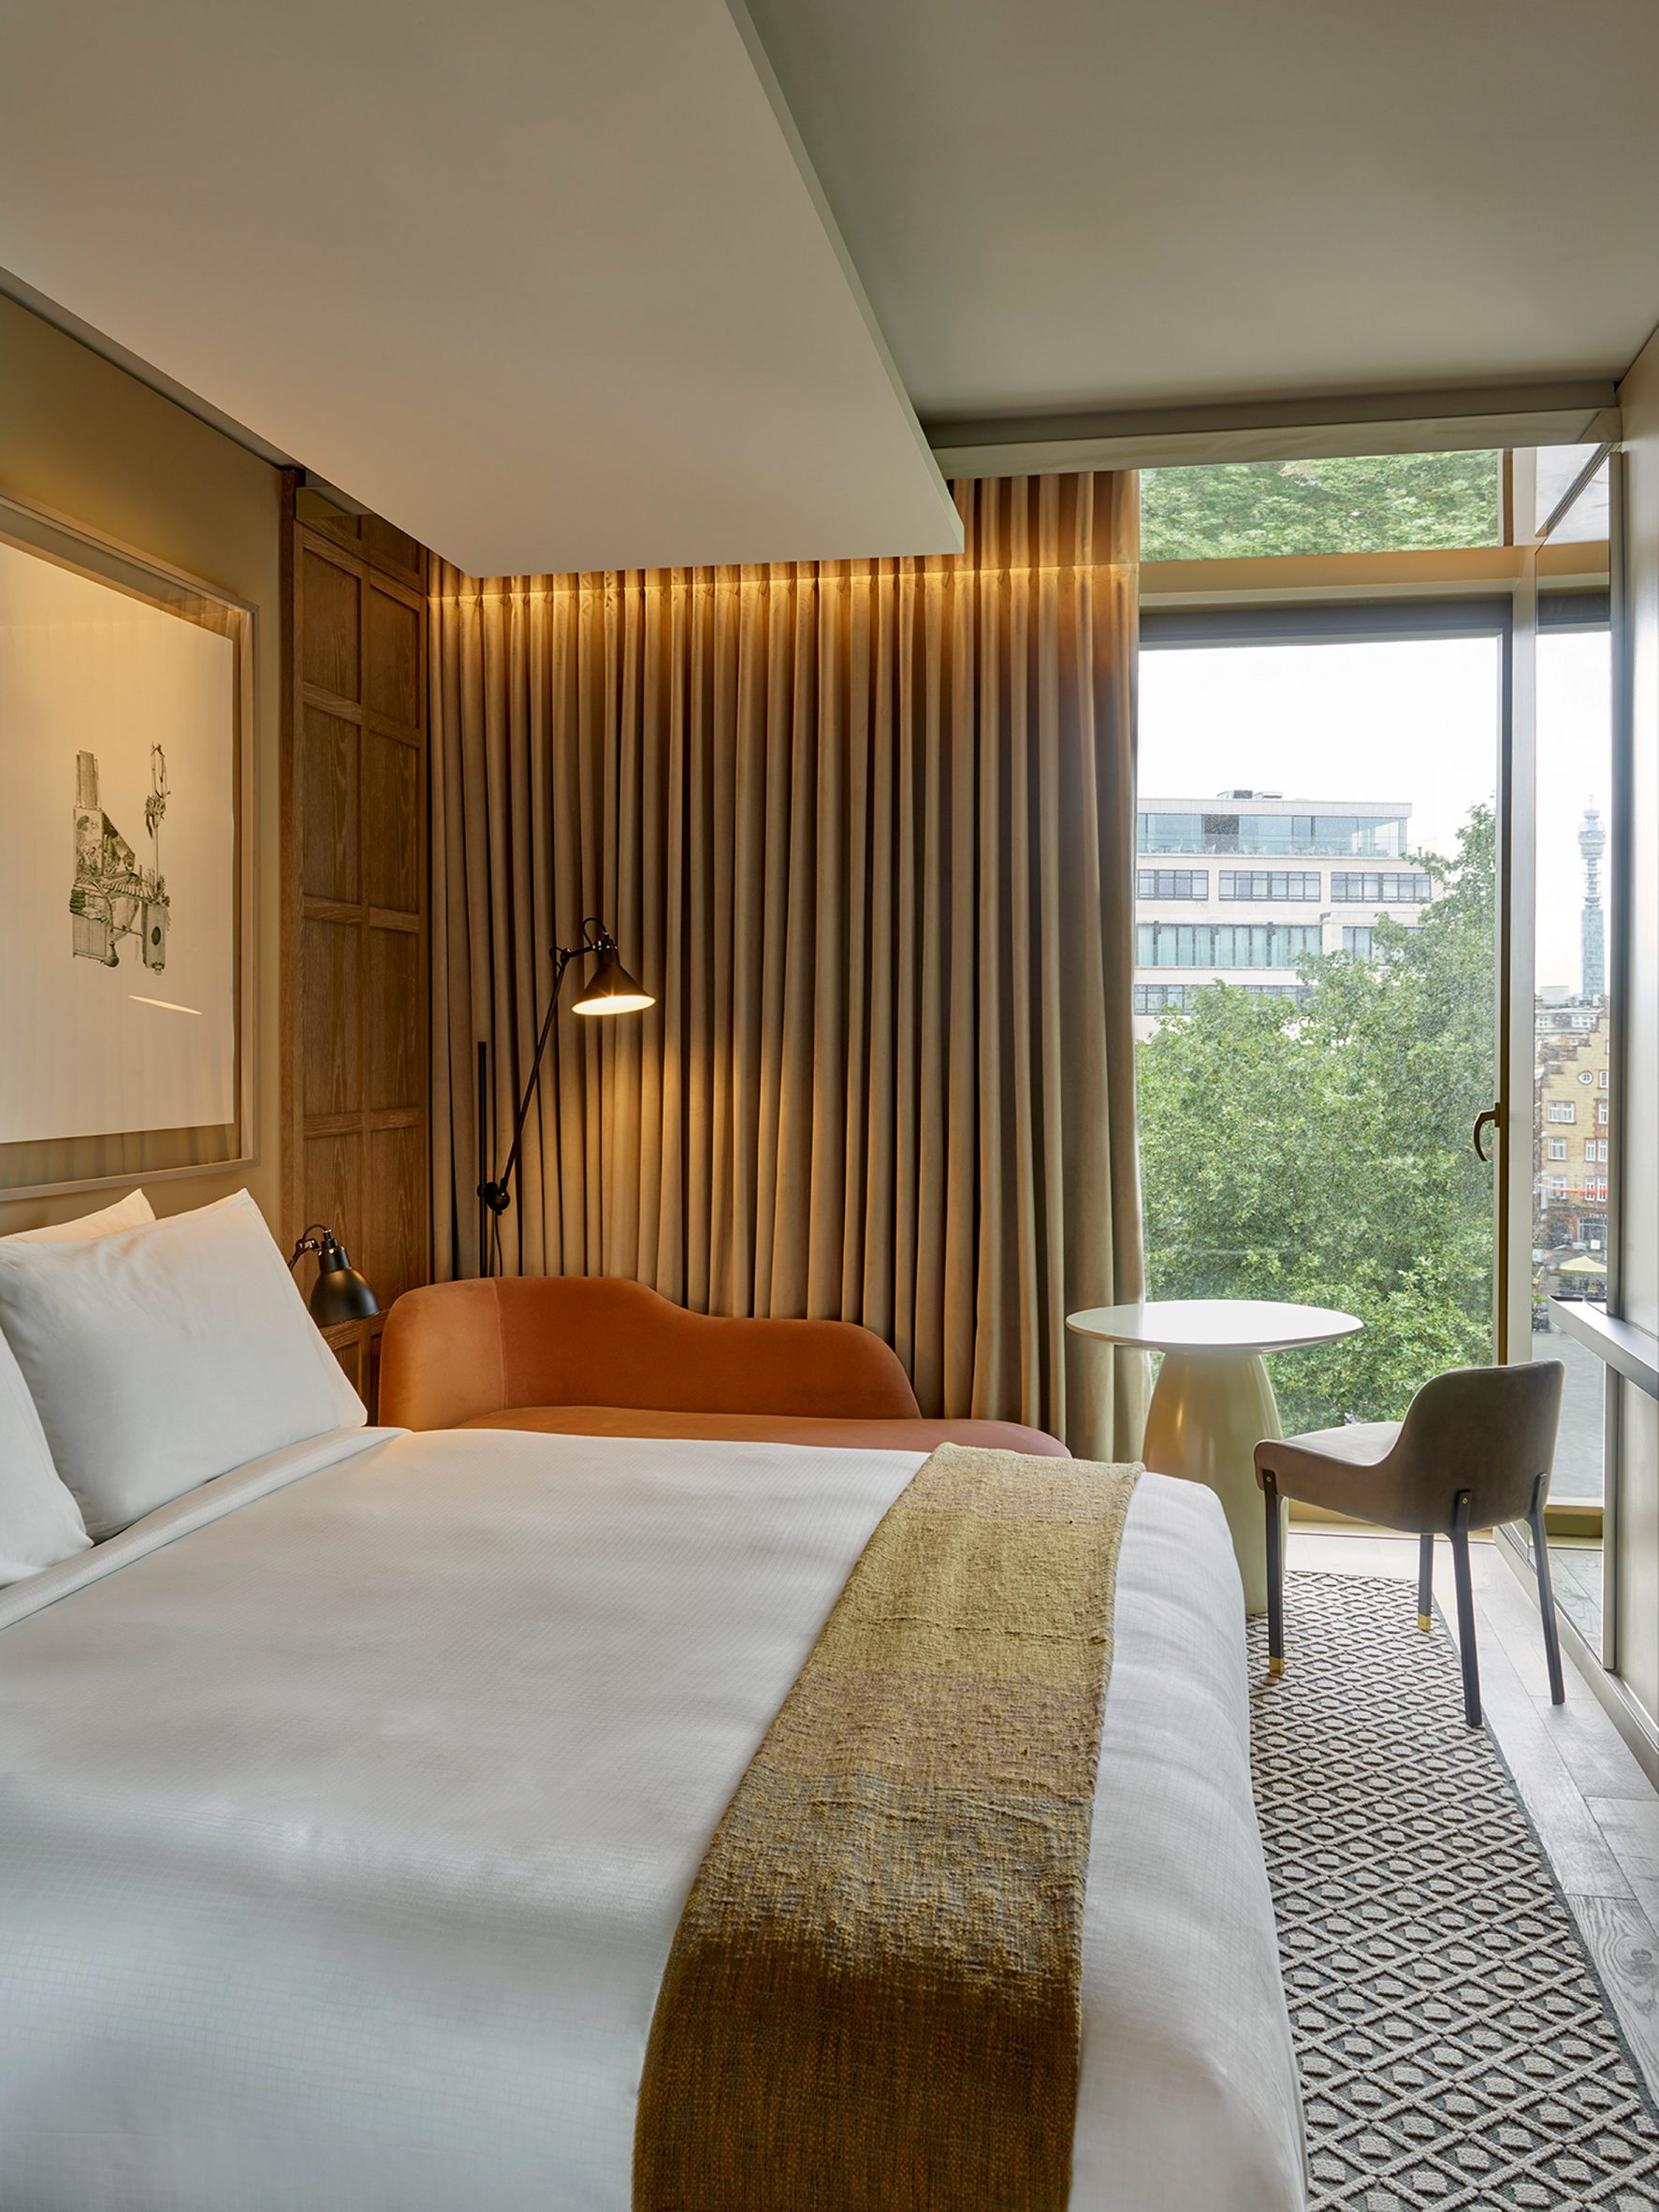 Bedroom at The Londoner hotel by Yabu Pushelberg